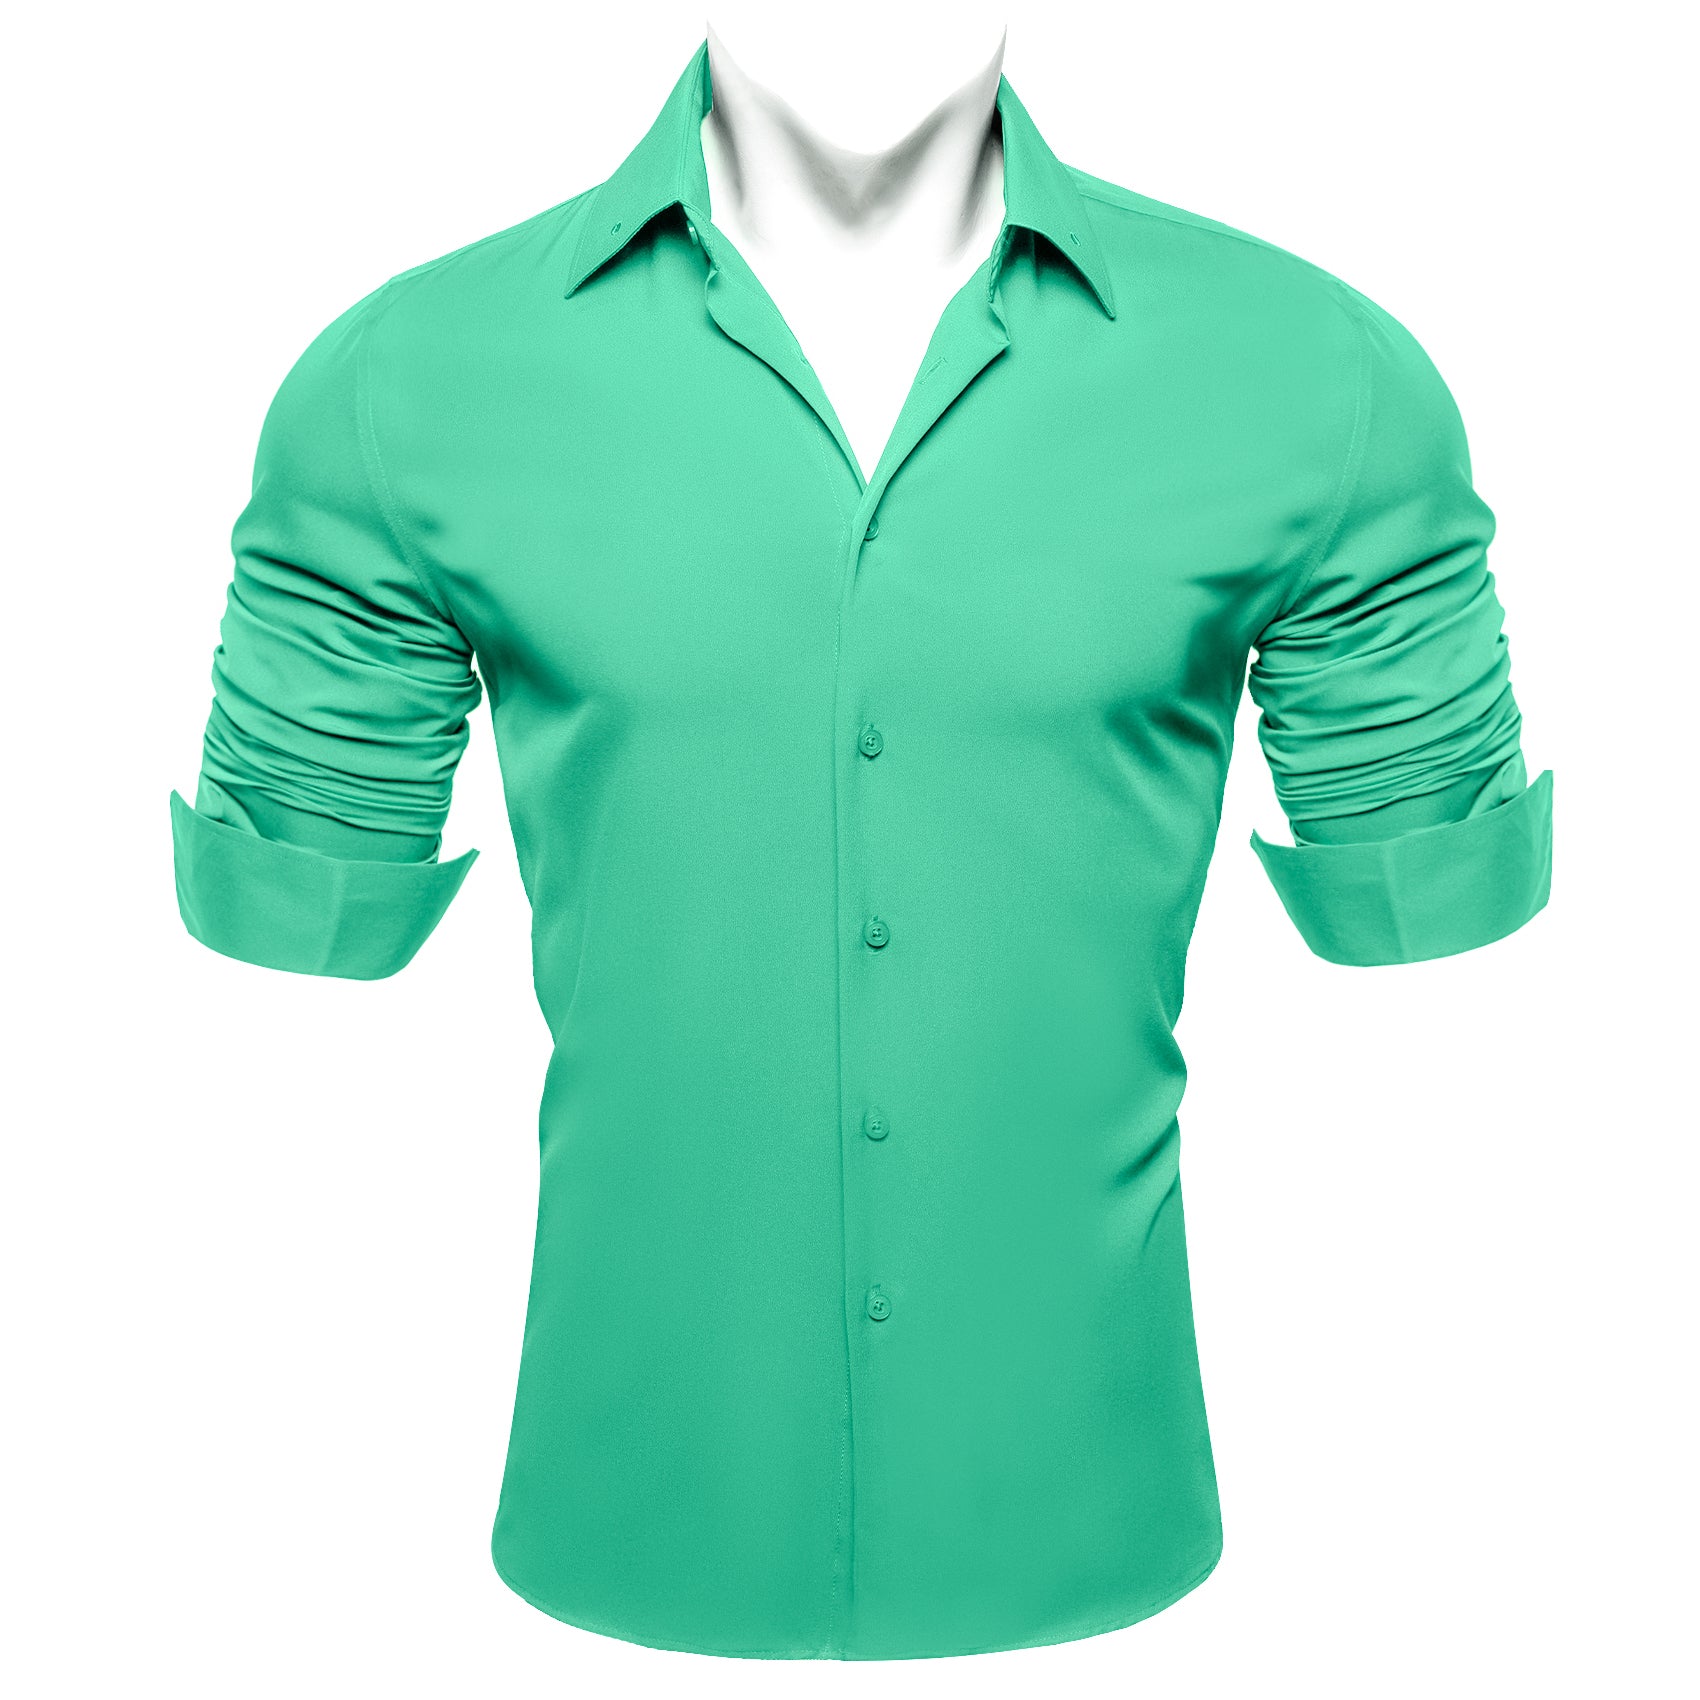 Barry.wang Pale Green Solid Silk Shirt